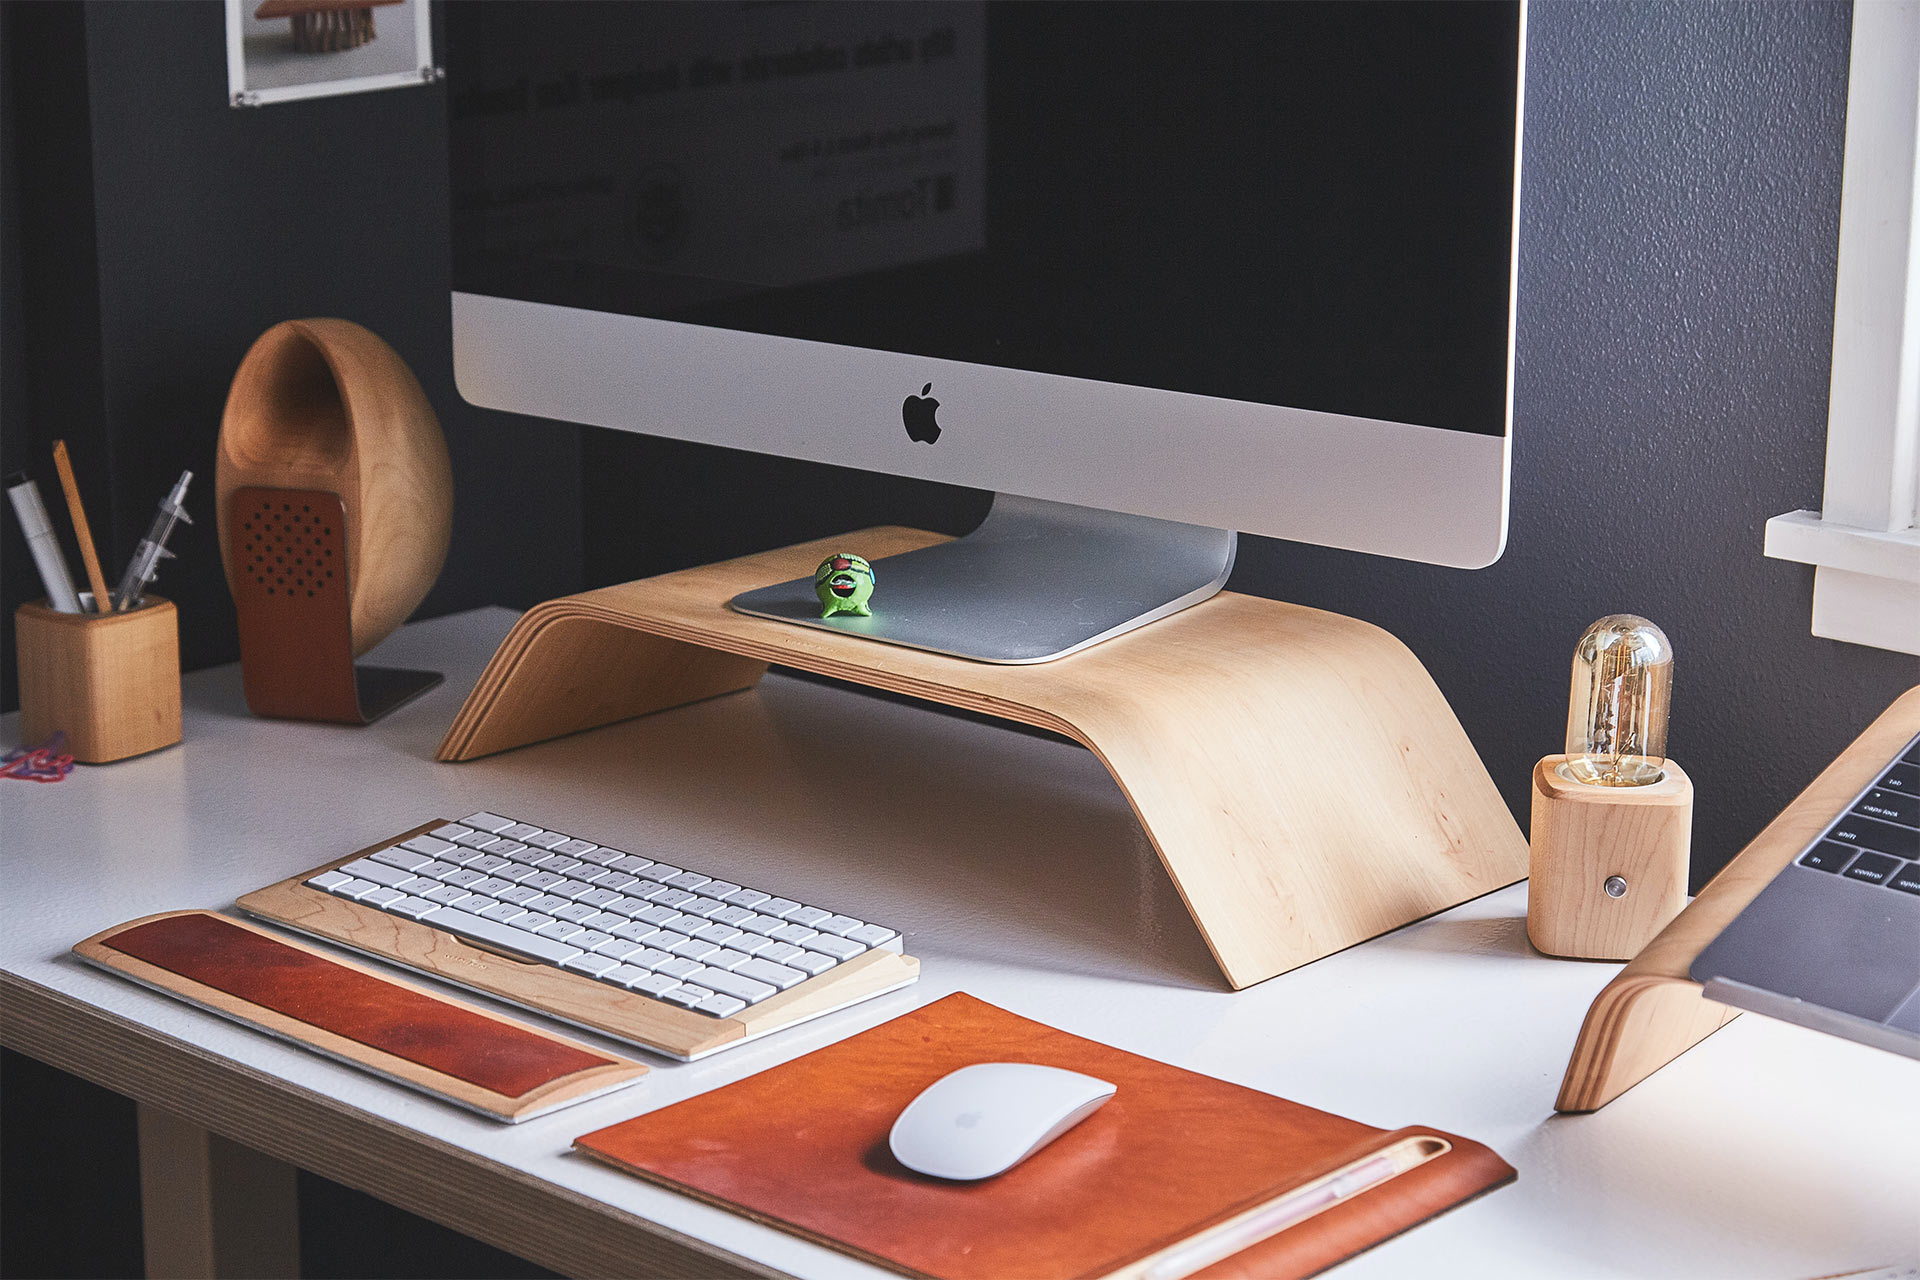 Sebuah iMac pada dirian kayu di atas meja dengan papan kekunci wayarles dan tetikus.